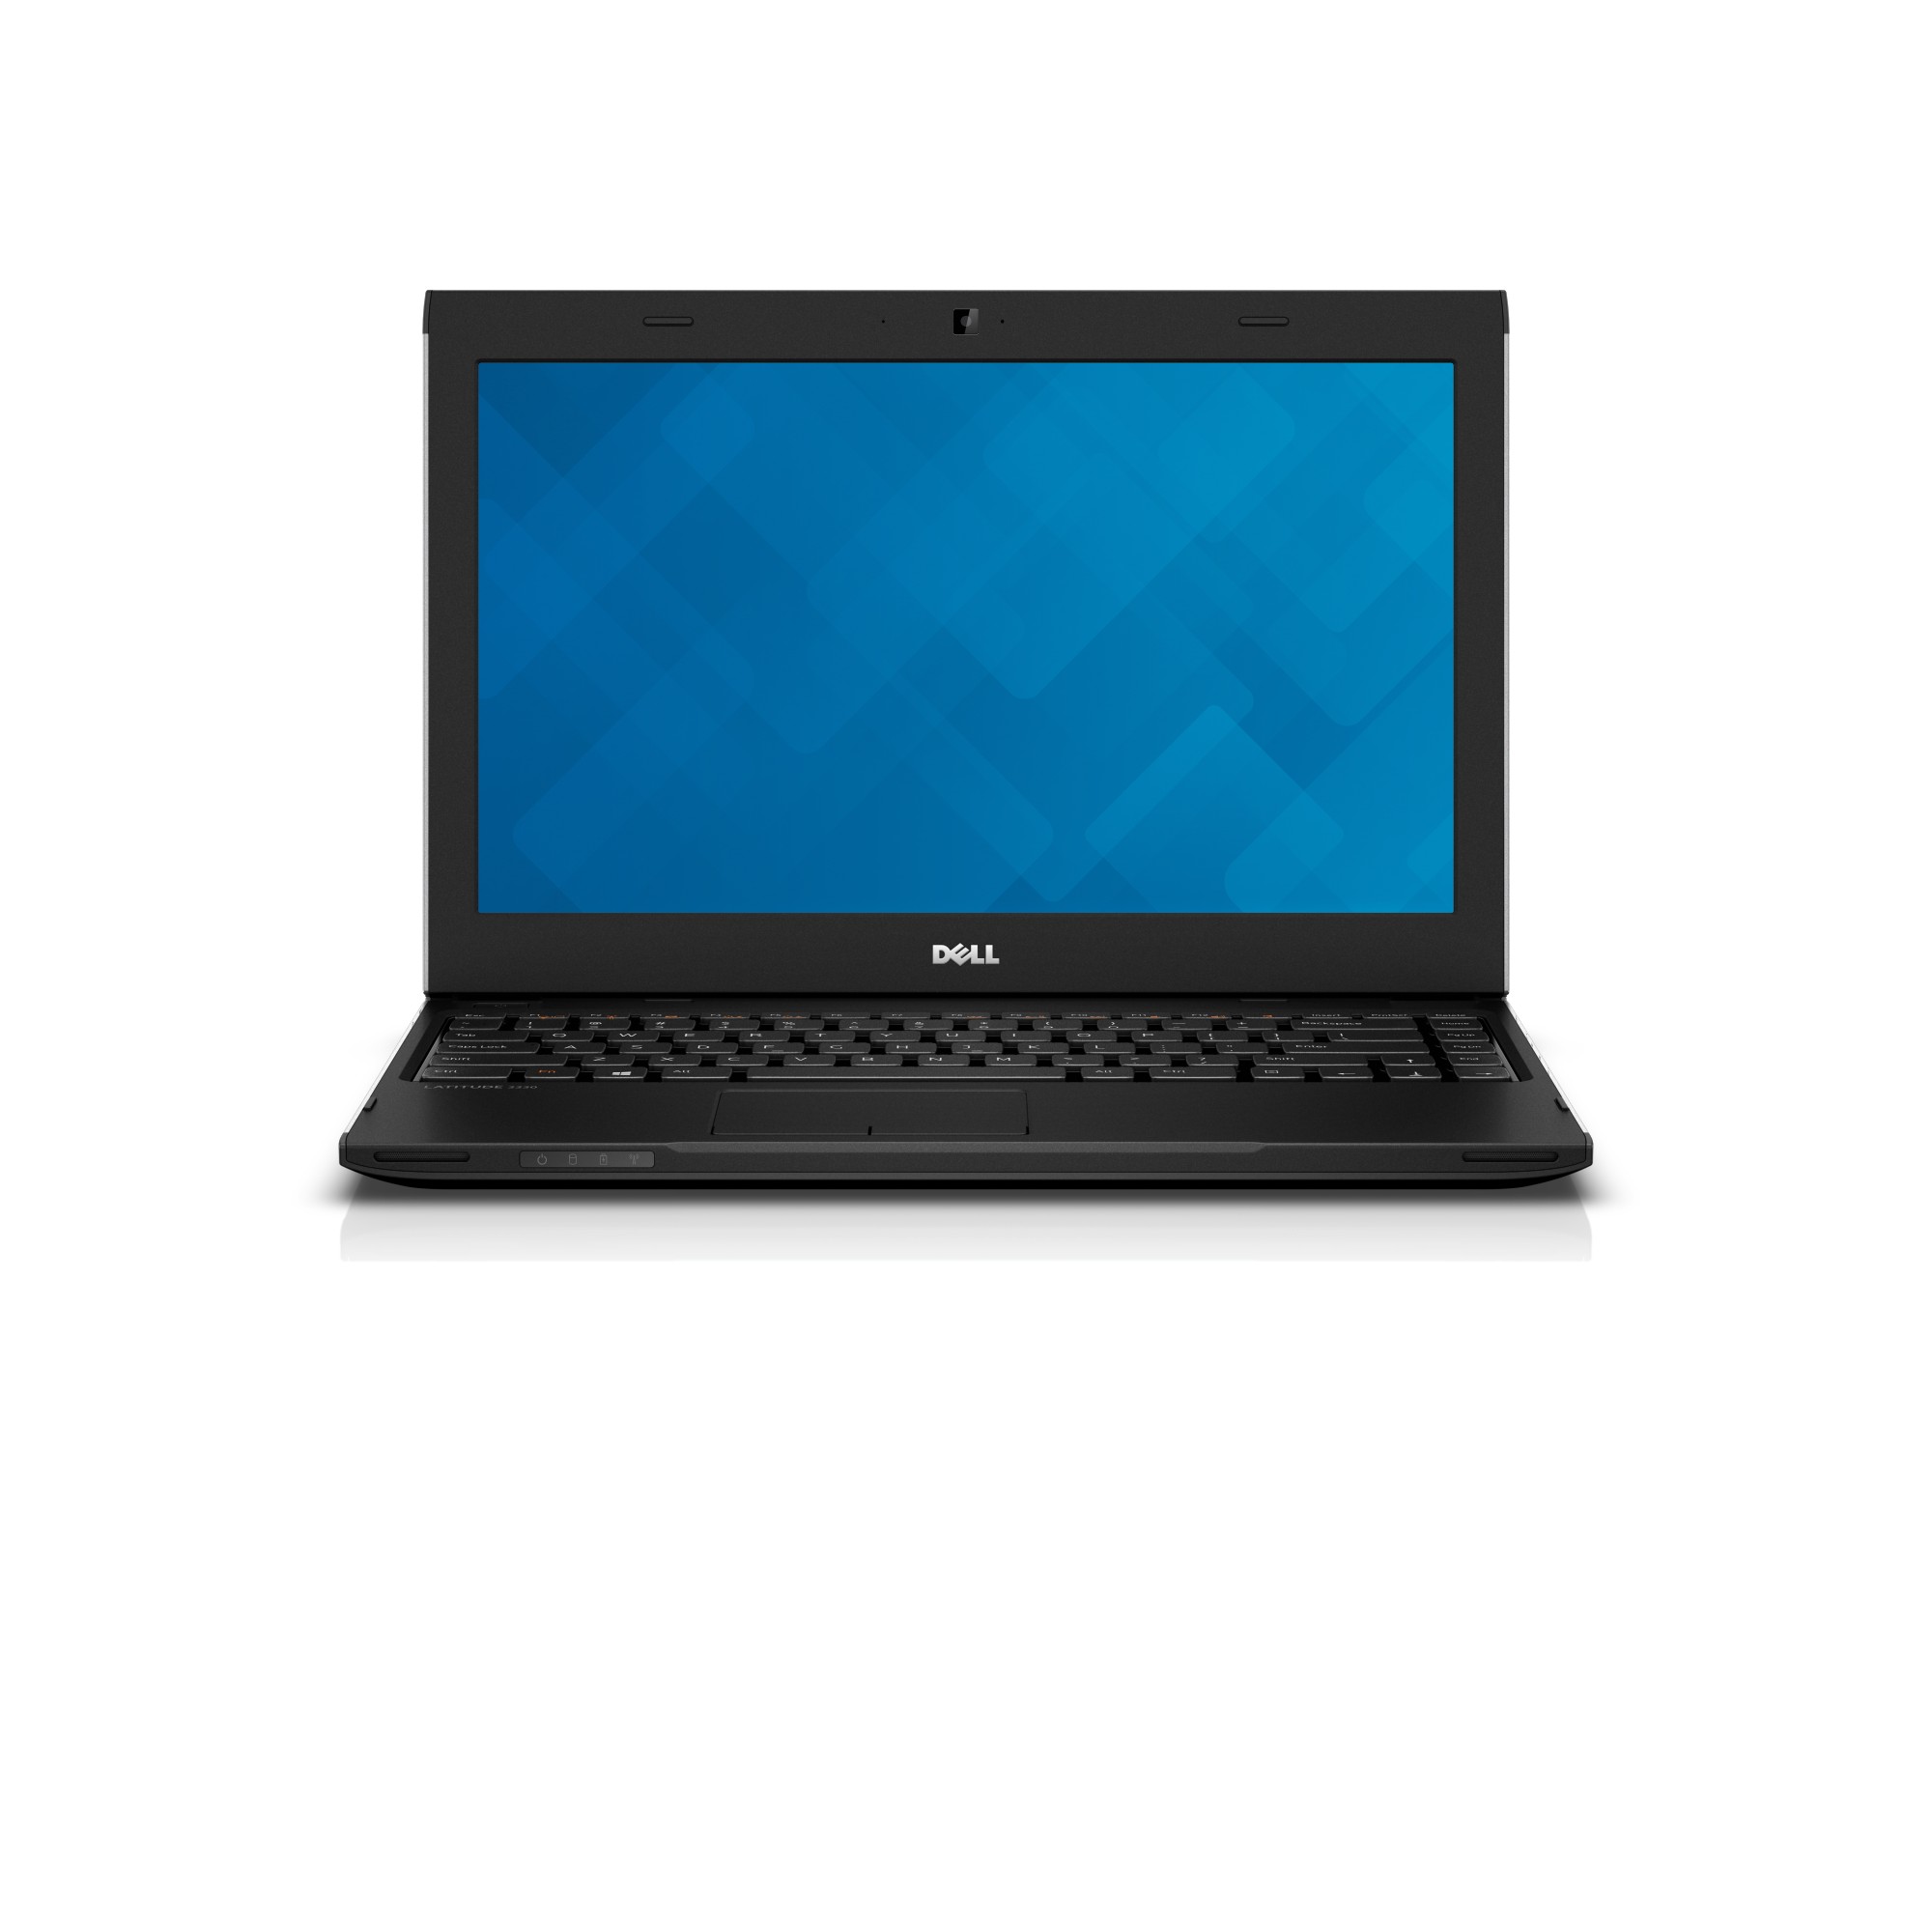 Dell: laptop dla szkół